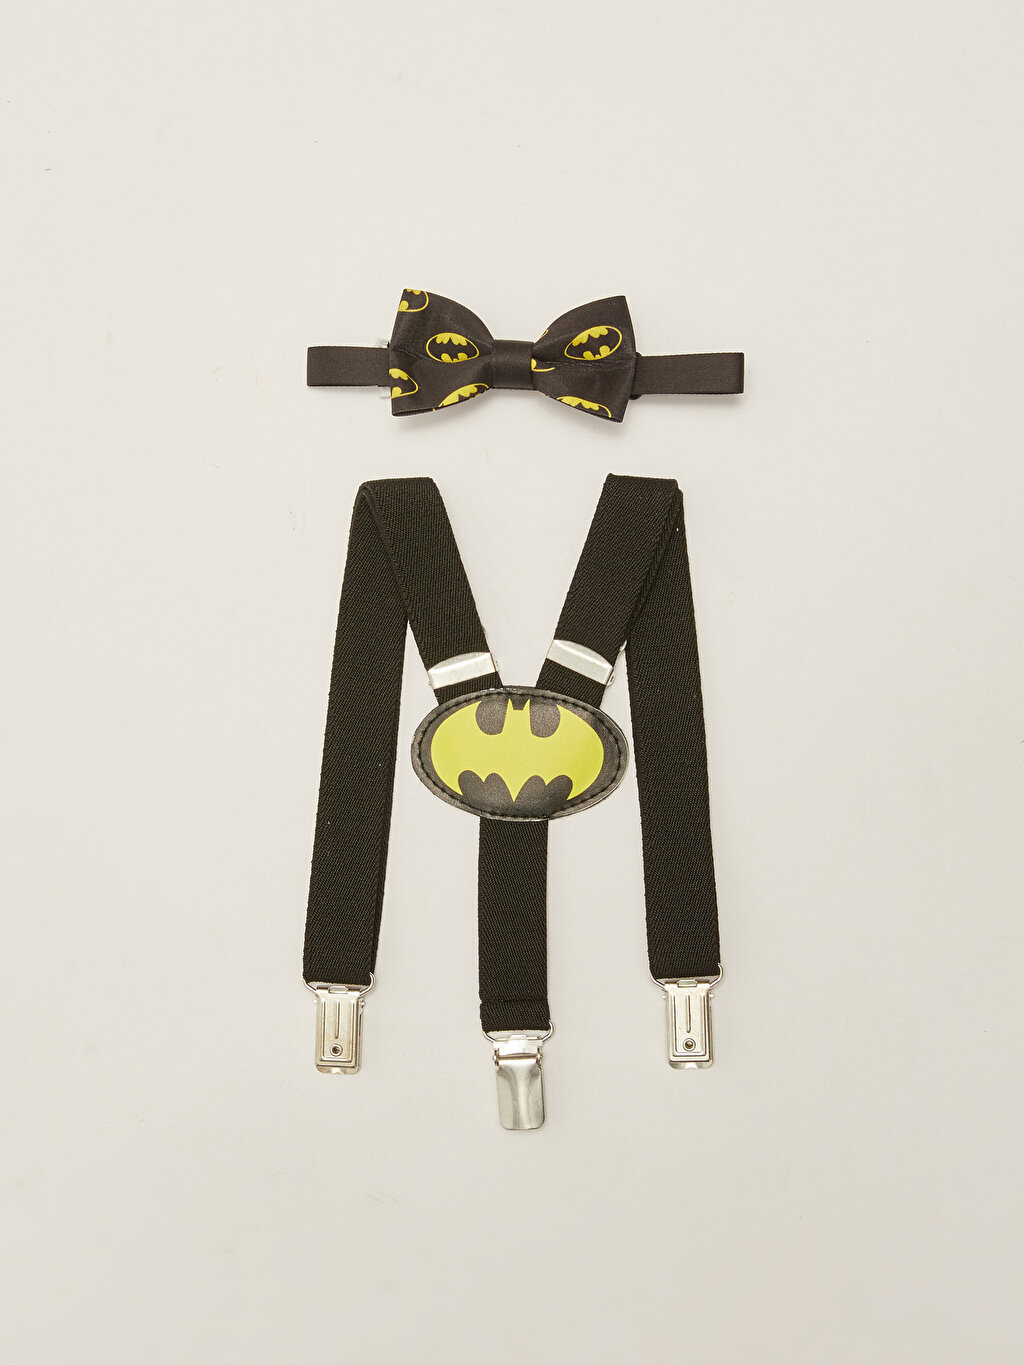 Batman Printed Baby Boy Pants Suspenders and Bow Tie 2-Pack Set  -S24694Z1-LQJ - S24694Z1-LQJ - LC Waikiki